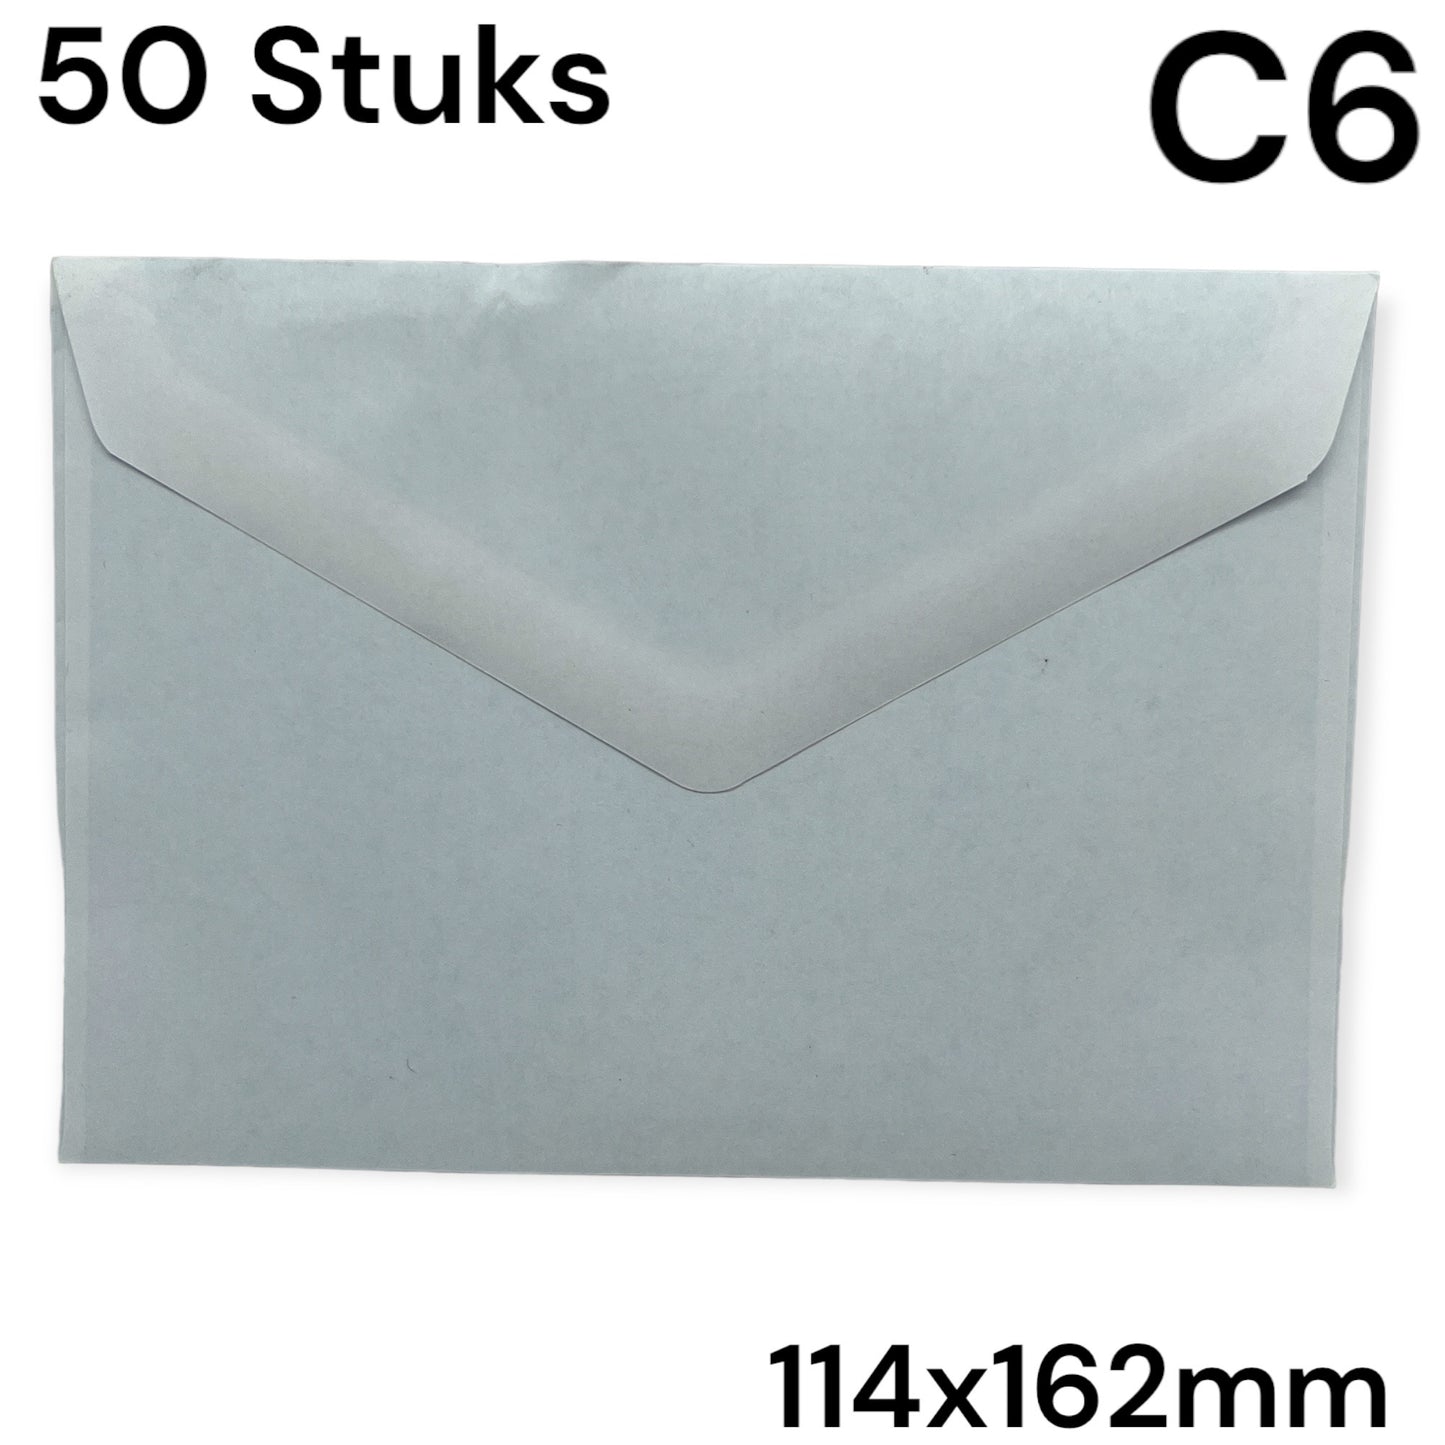 C6 Envelope White 114x162mm 50 Pieces